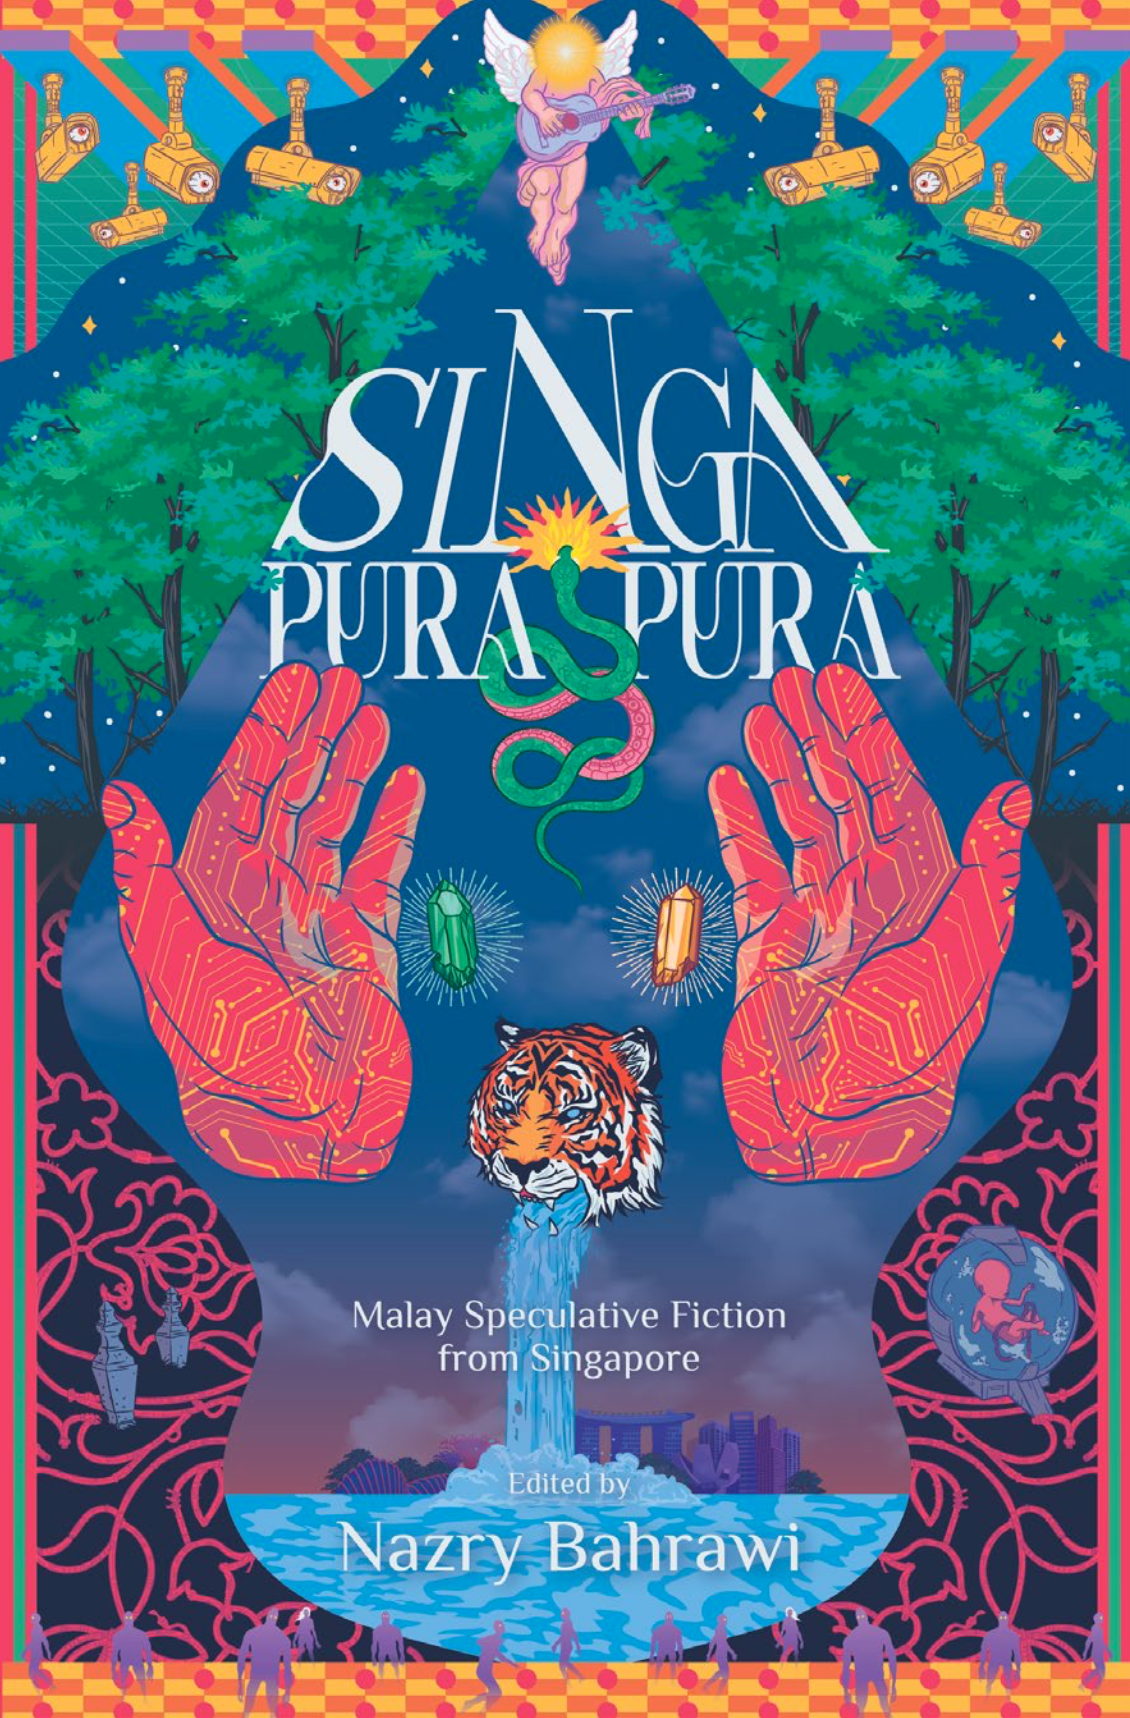 Singa-Pura-Pura: Malay Speculative Fiction from Singapore